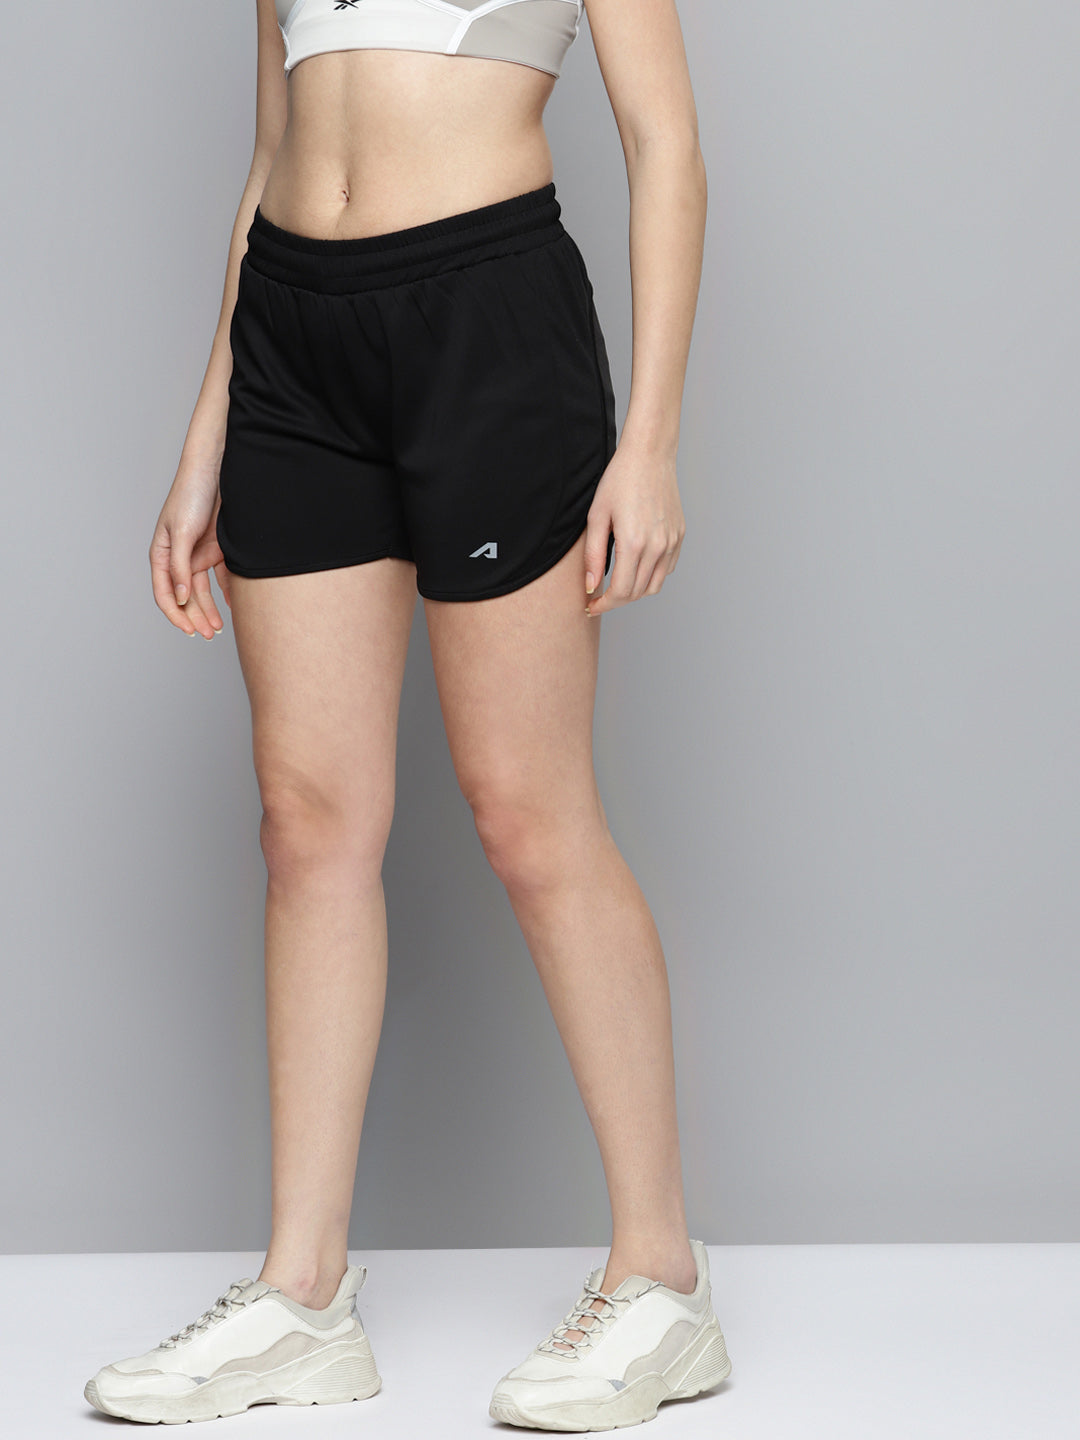 Alcis Women Black Slim Fit Training or Gym Sports Shorts